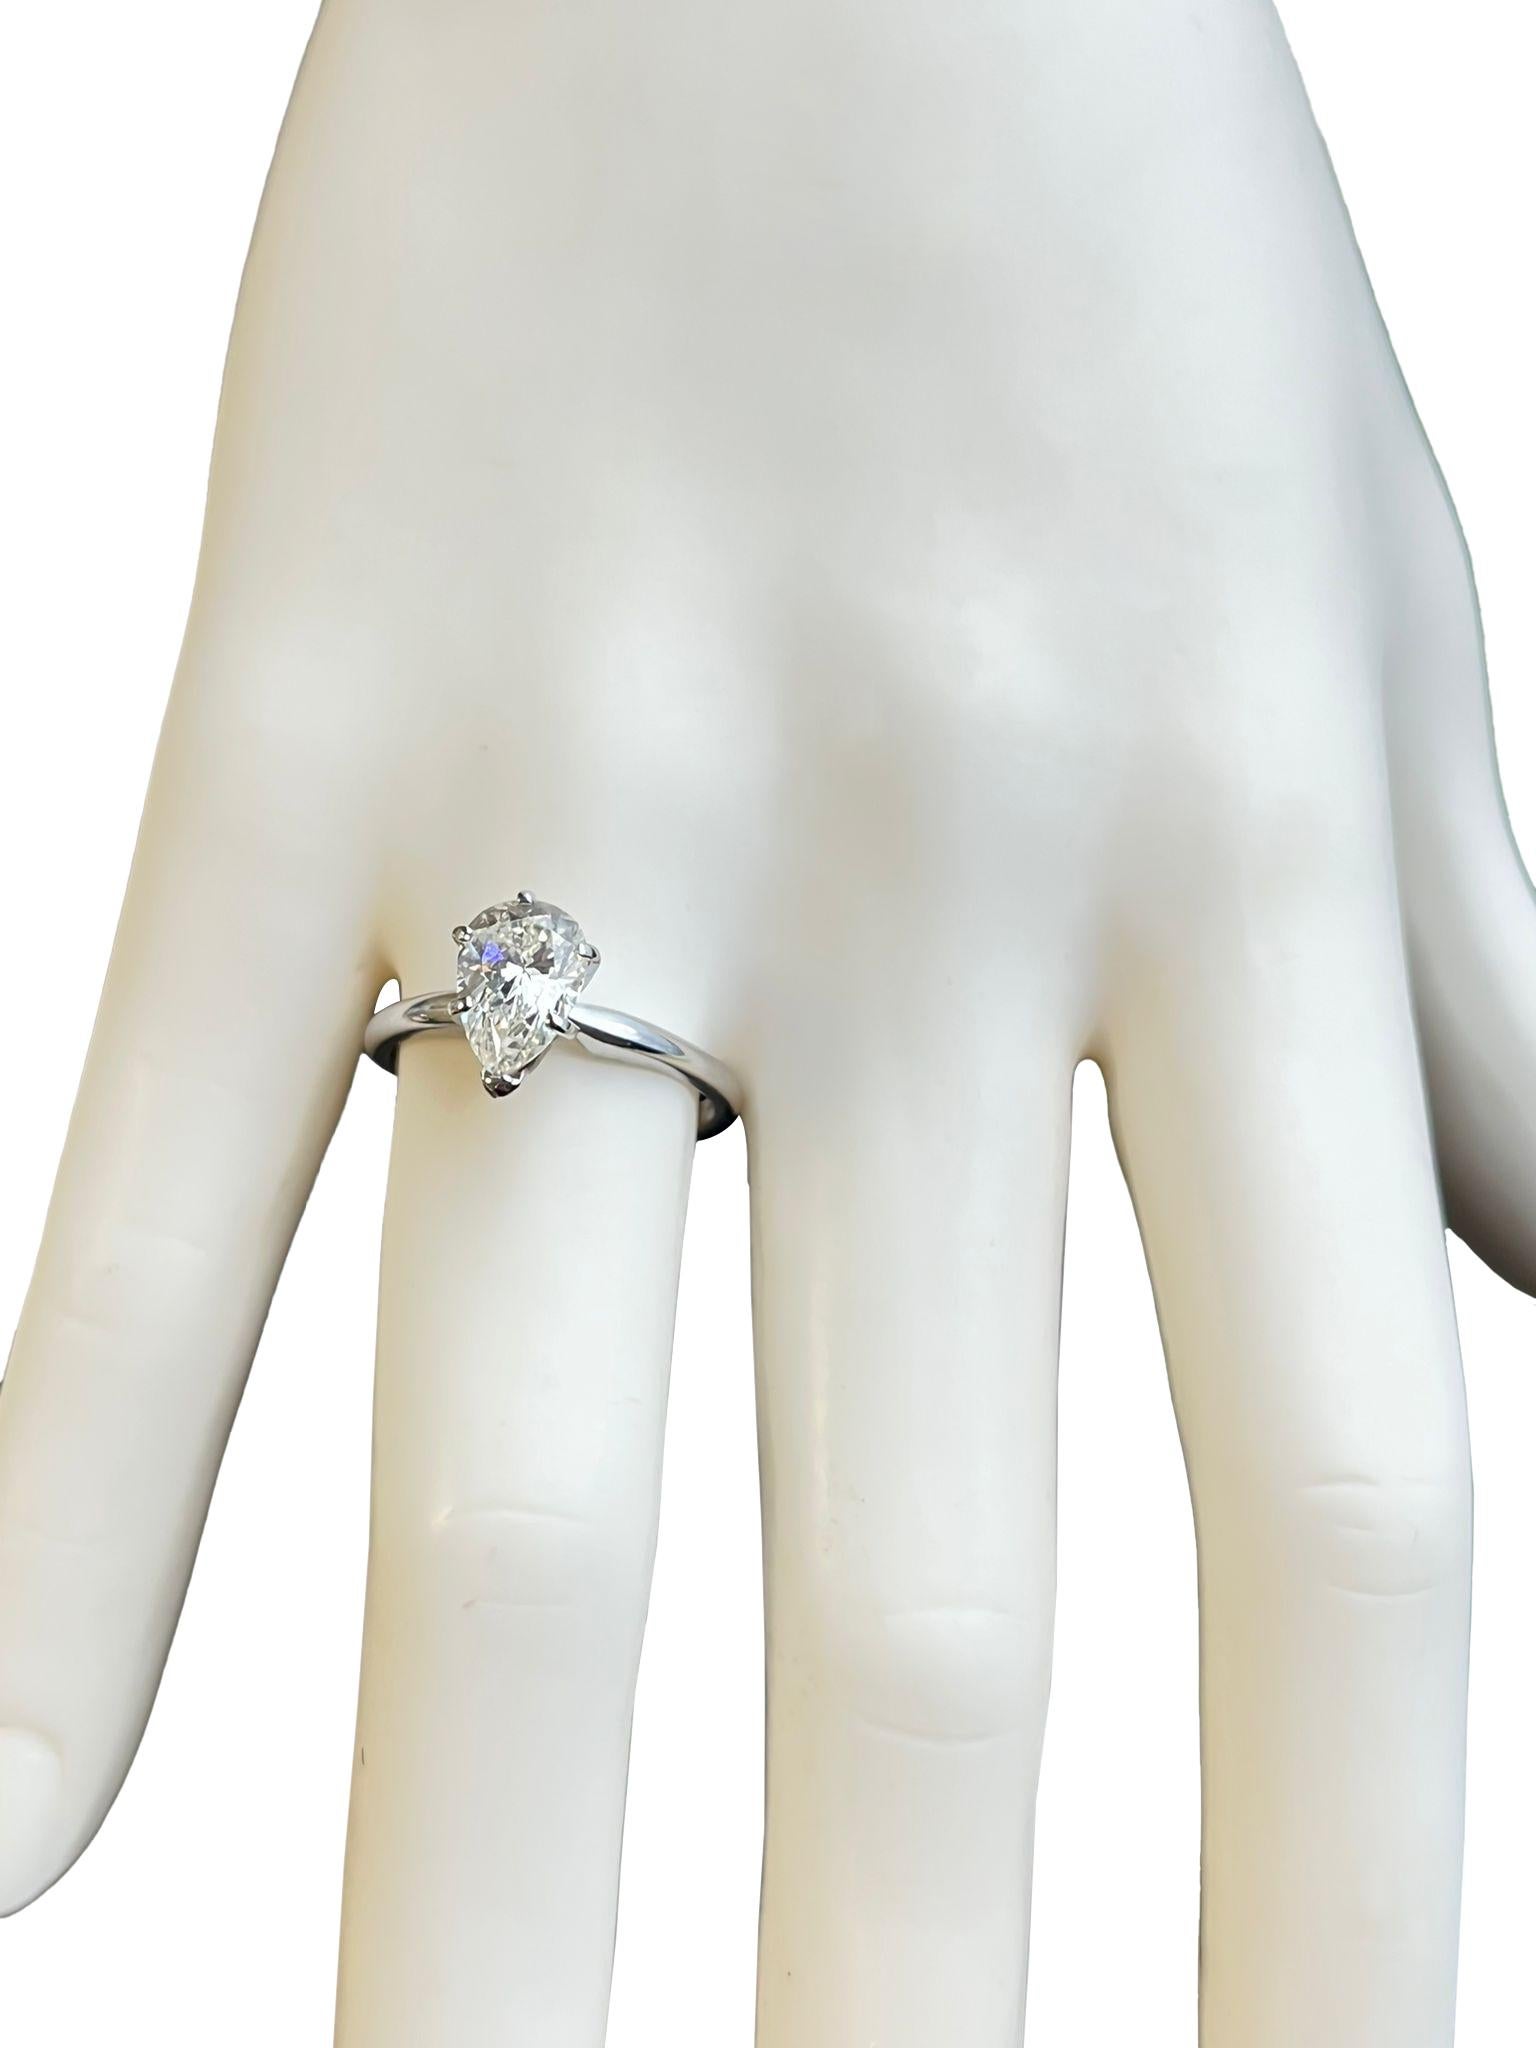 Women's Flawless 1.92 Carat Pear-Shape Diamond Ring Antique Classic Fancy Jewelry For Sale